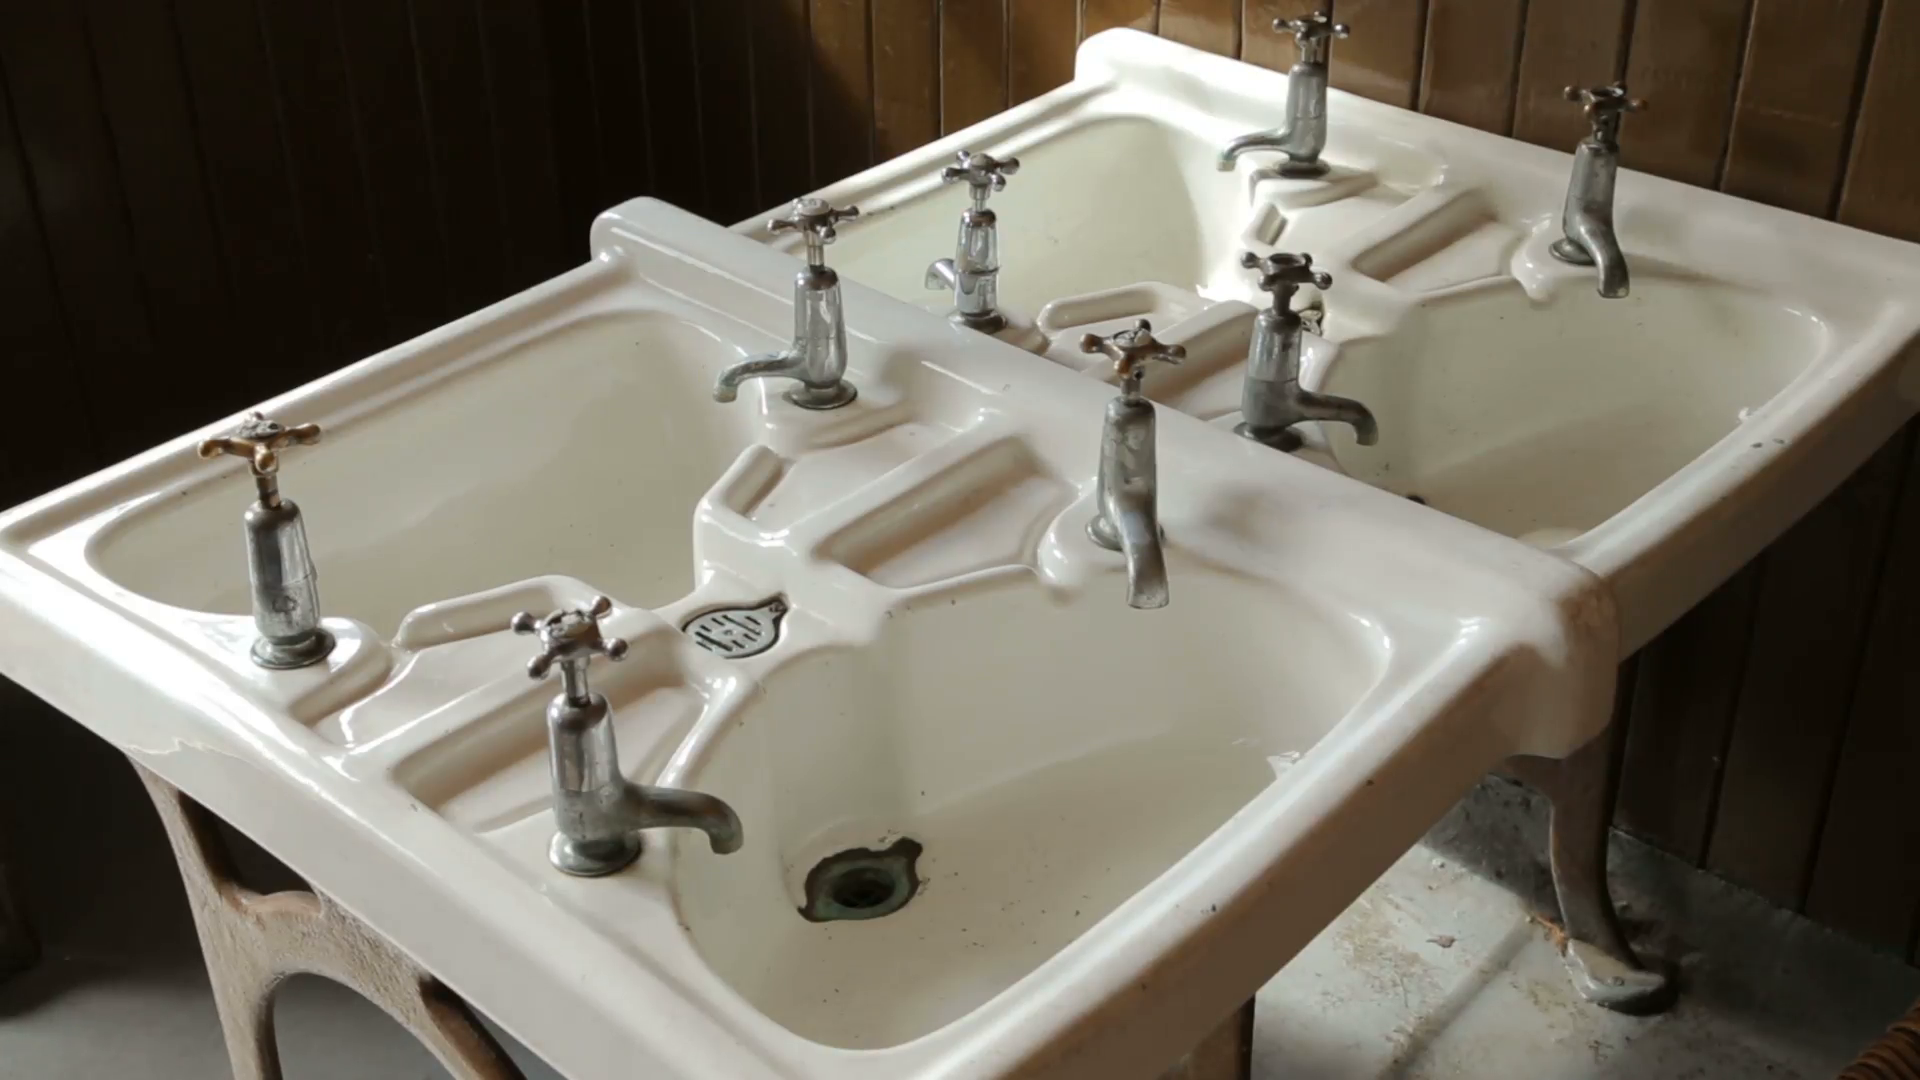 Edwardian Sinks Or Washbasins In A School Stock Video Footage   Videoblocks - School Bathroom, Transparent background PNG HD thumbnail